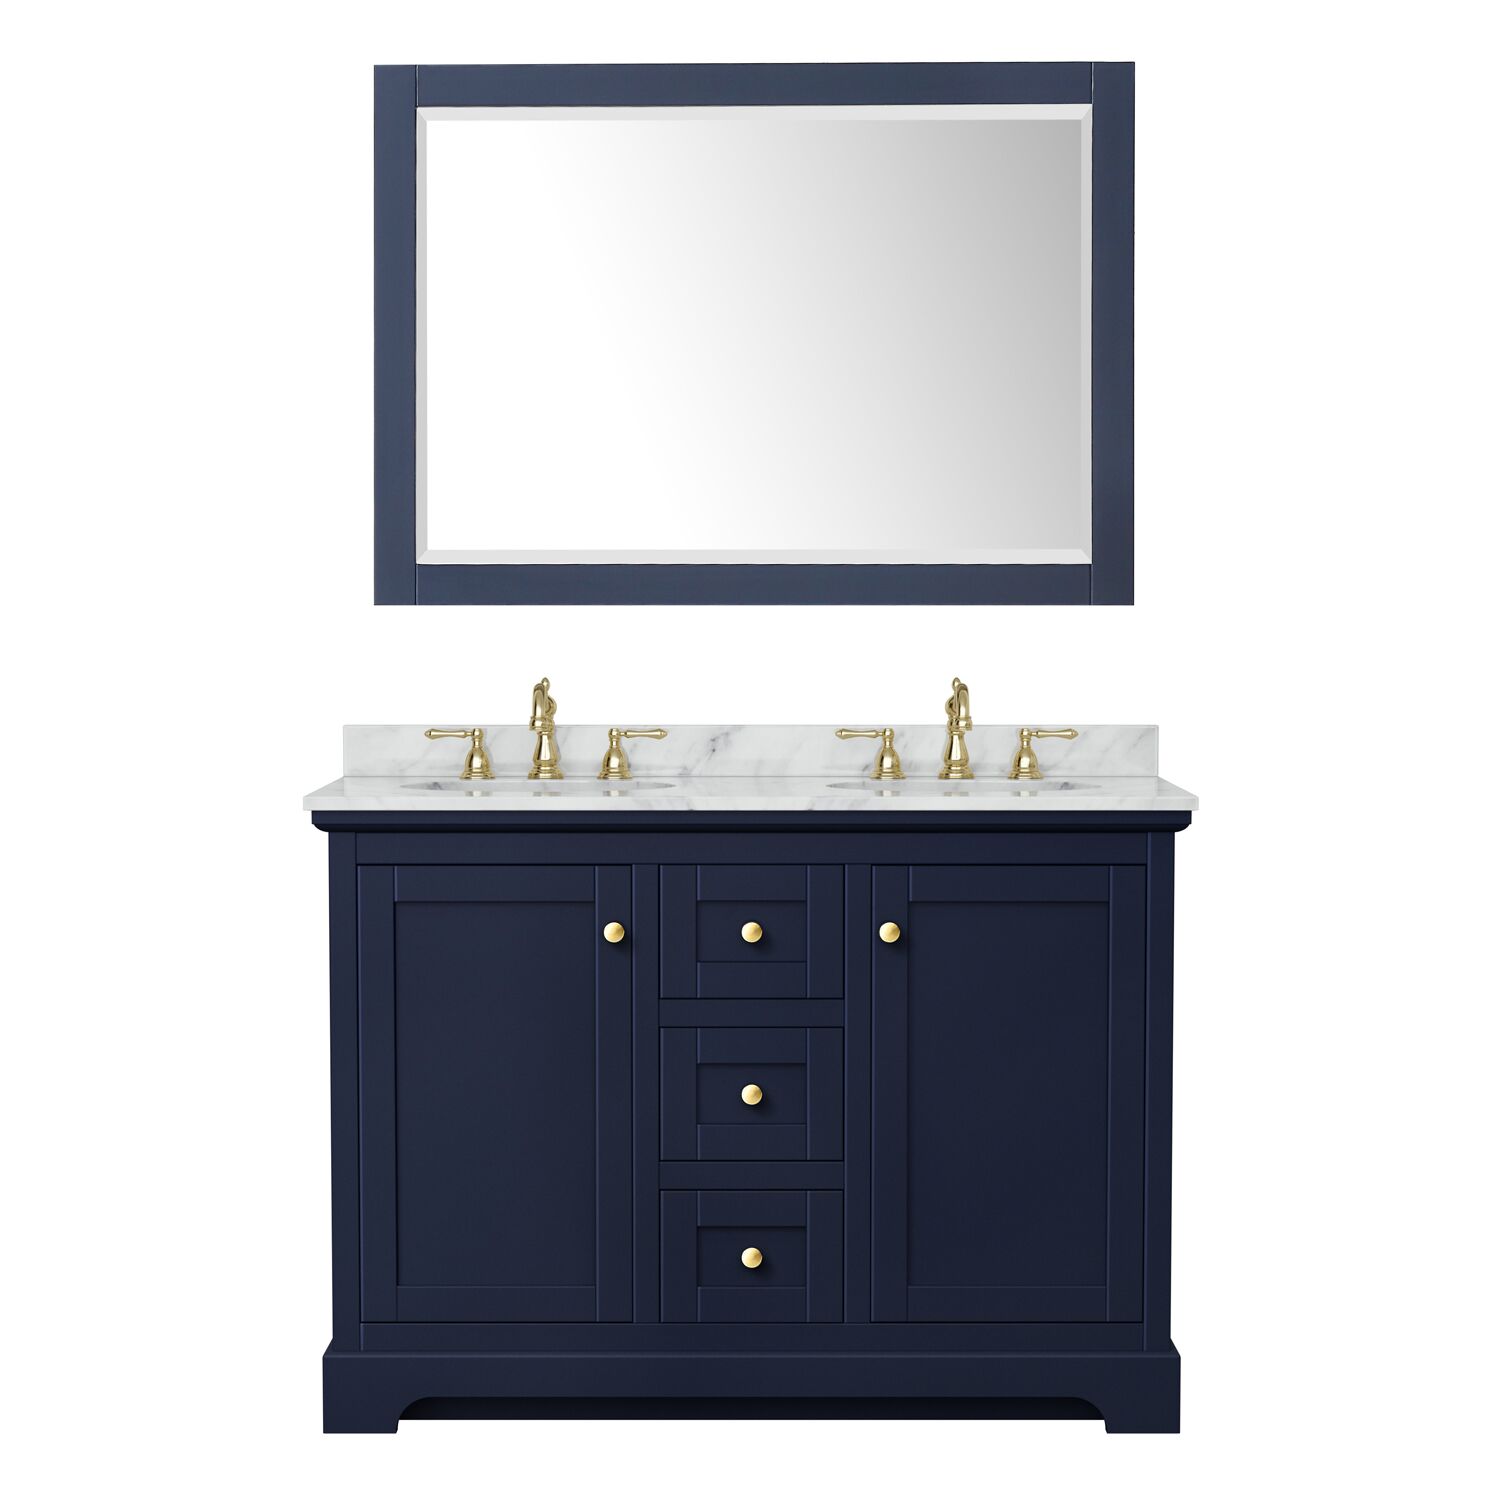 48" Double Bathroom Vanity in Dark Blue with Countertop, Sinks and Mirror Options